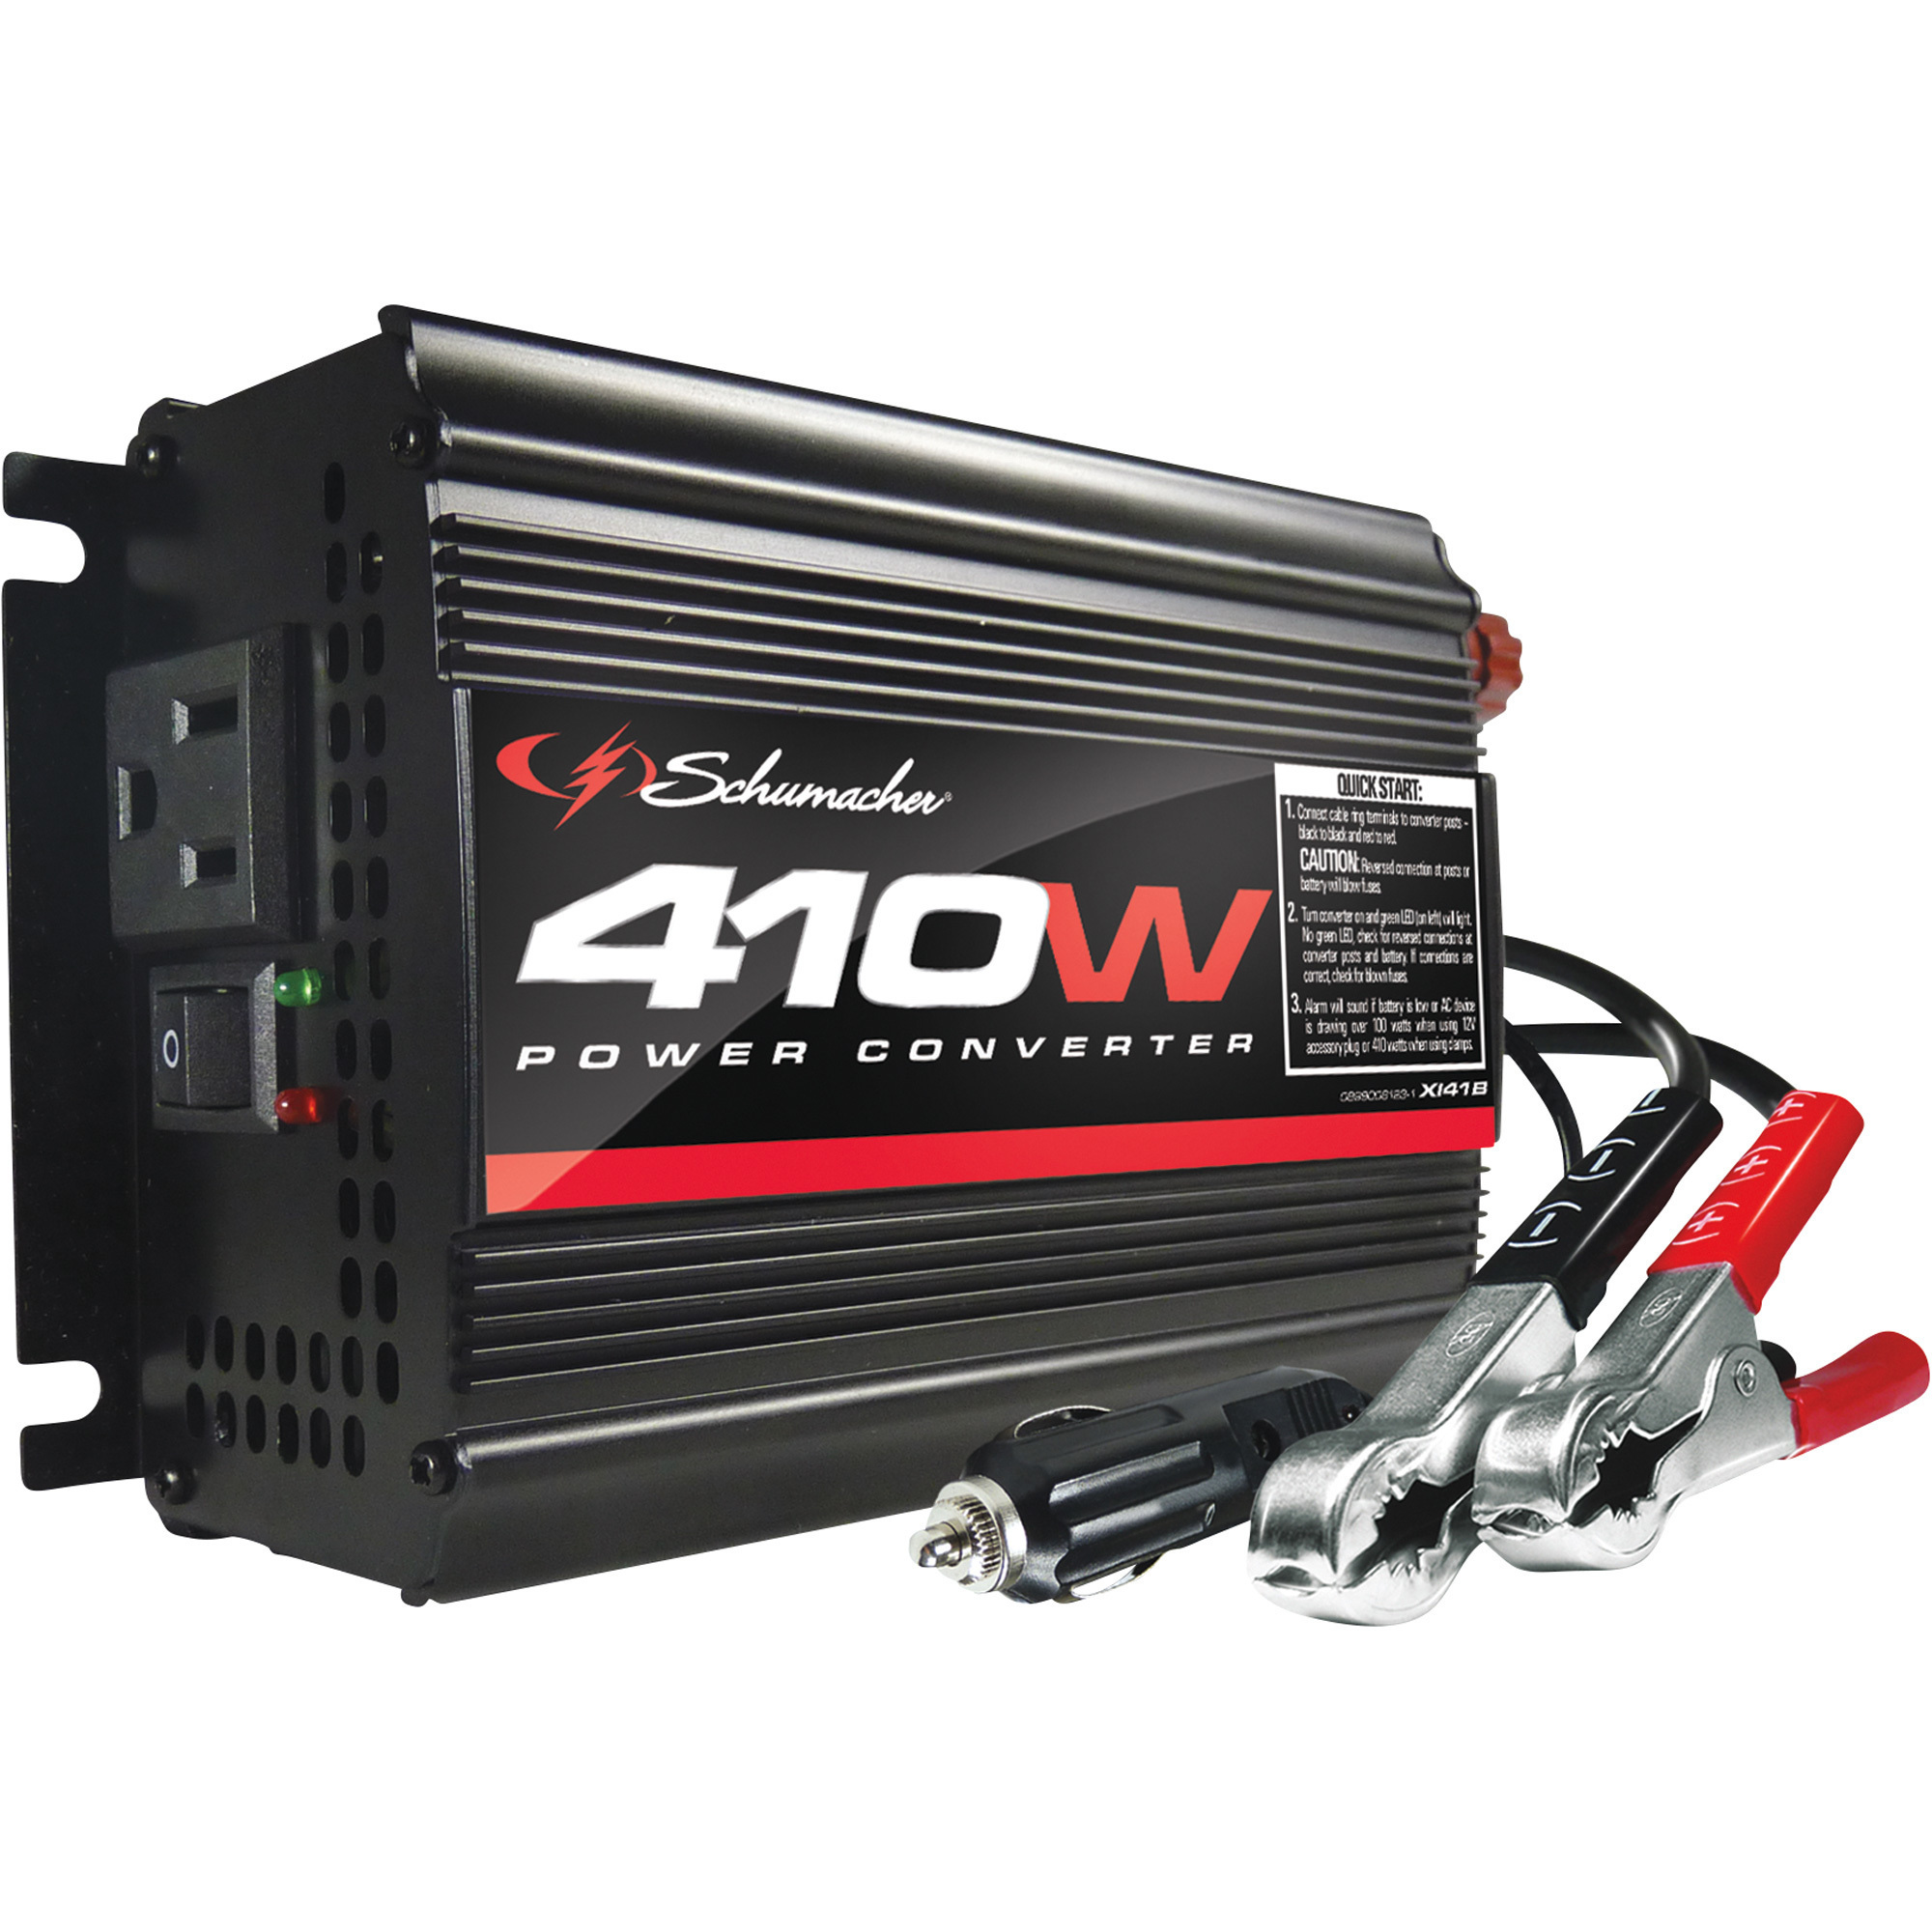 Schumacher Modified Sine Wave Power Converter â 410 Watts, 1 AC Outlet/1 USB Port, Model XI41B